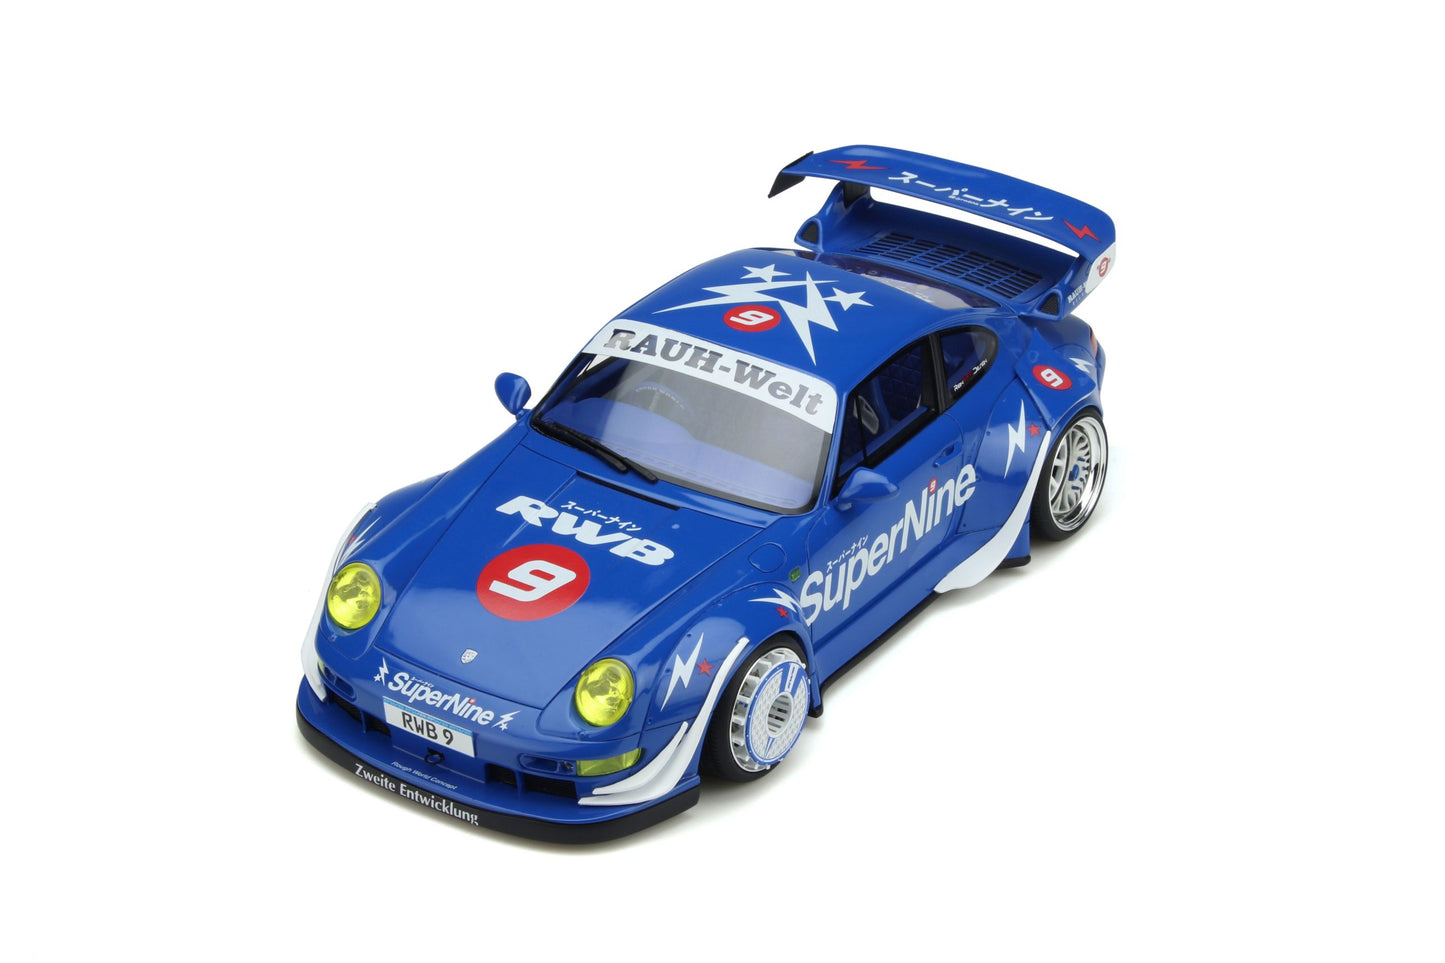 GT Spirit - RWB Porshce 911 (993) "Supernine" (Blue) 1:18 Scale Model Car